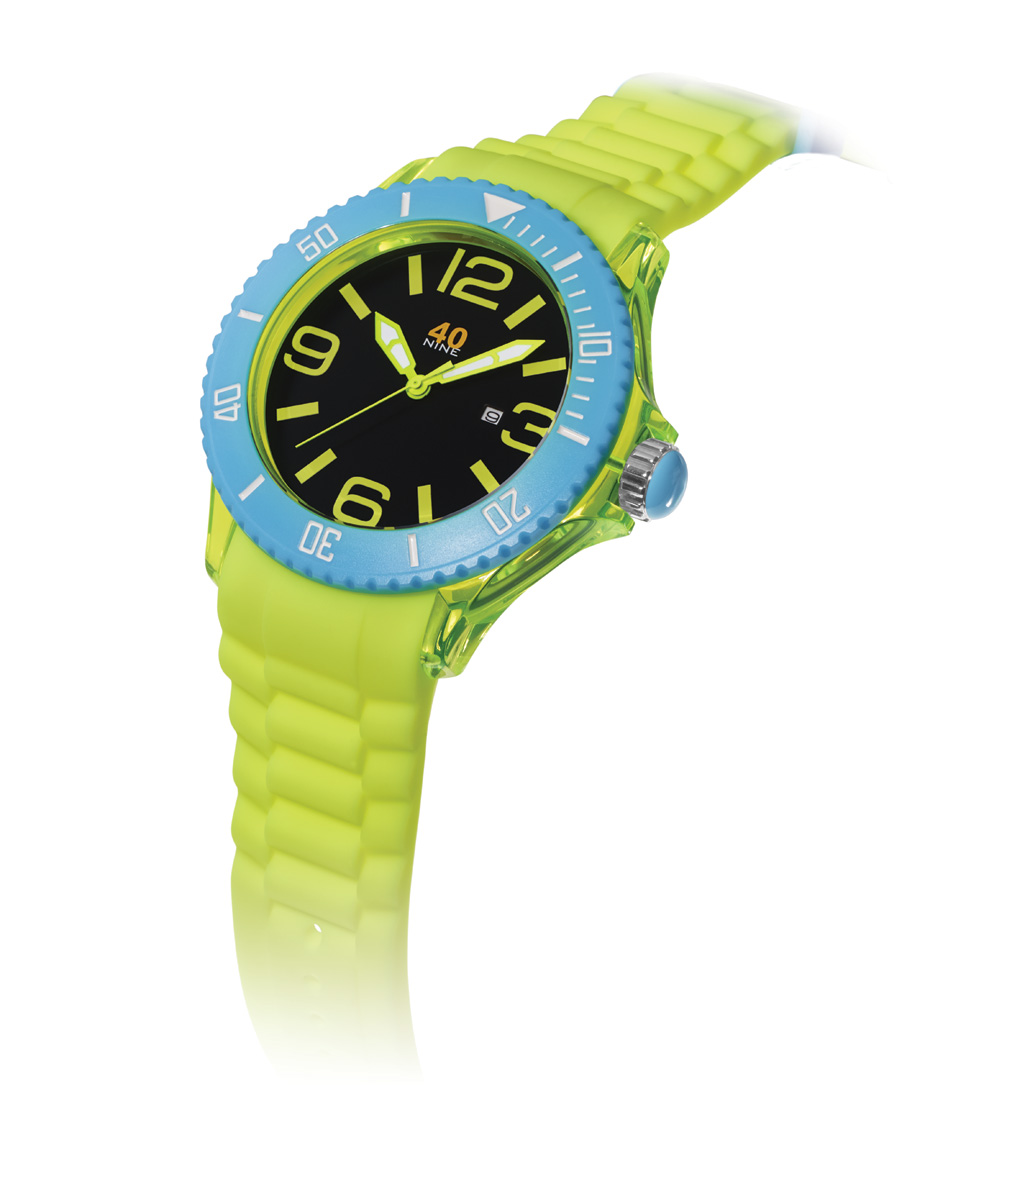 40Nine Yellow Watch